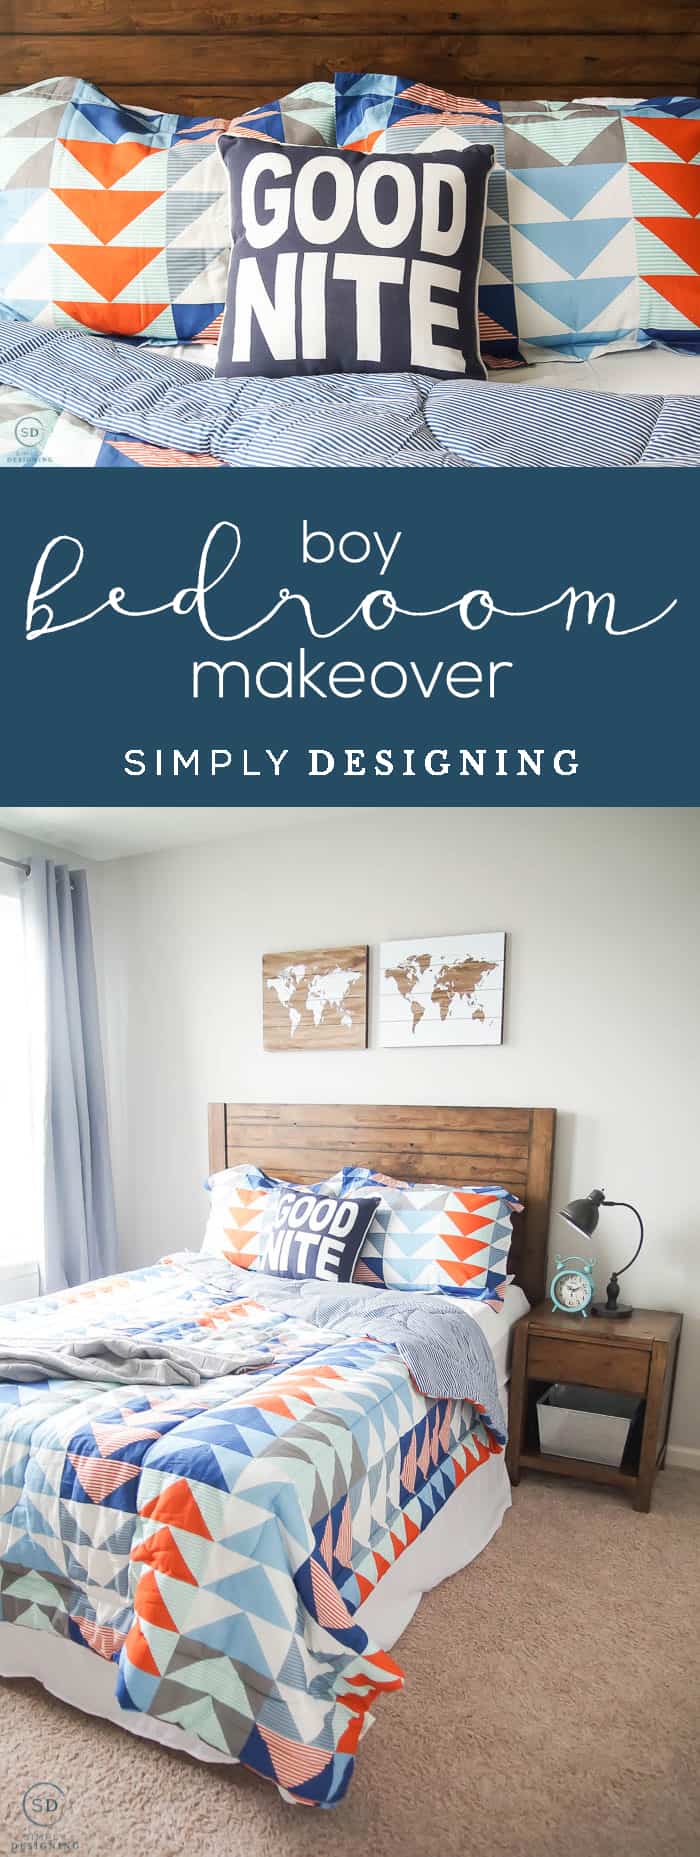 Easy and Cool Boy Bedroom Idea - Boy Bedroom Makeover - boy bedroom idea on a budget - awesome boy bedroom idea - #ad #BHGLiveBetter #BHGatWalmart @BHGLiveBetter @walmart